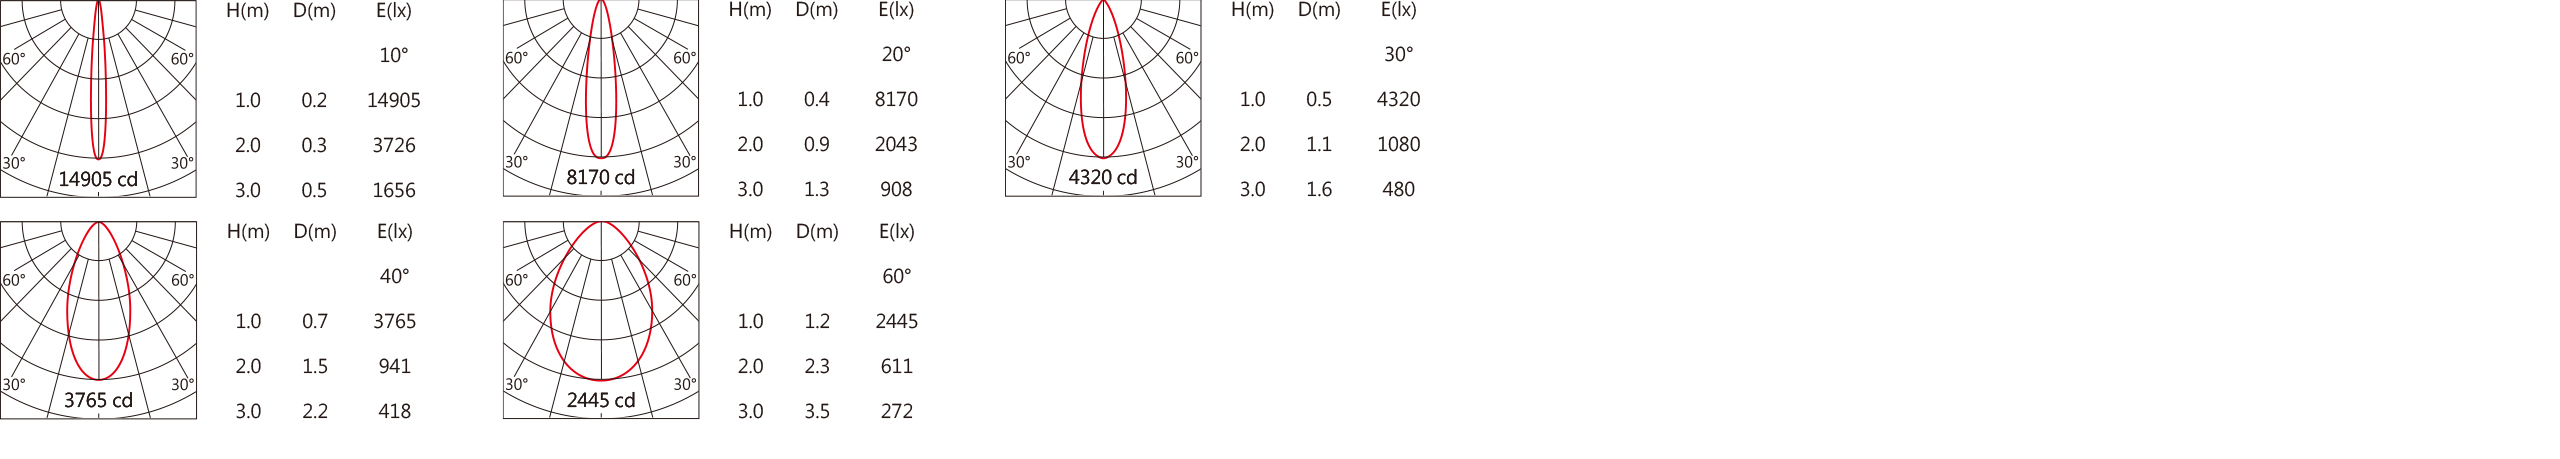 OFA-115C Light distribution.jpg